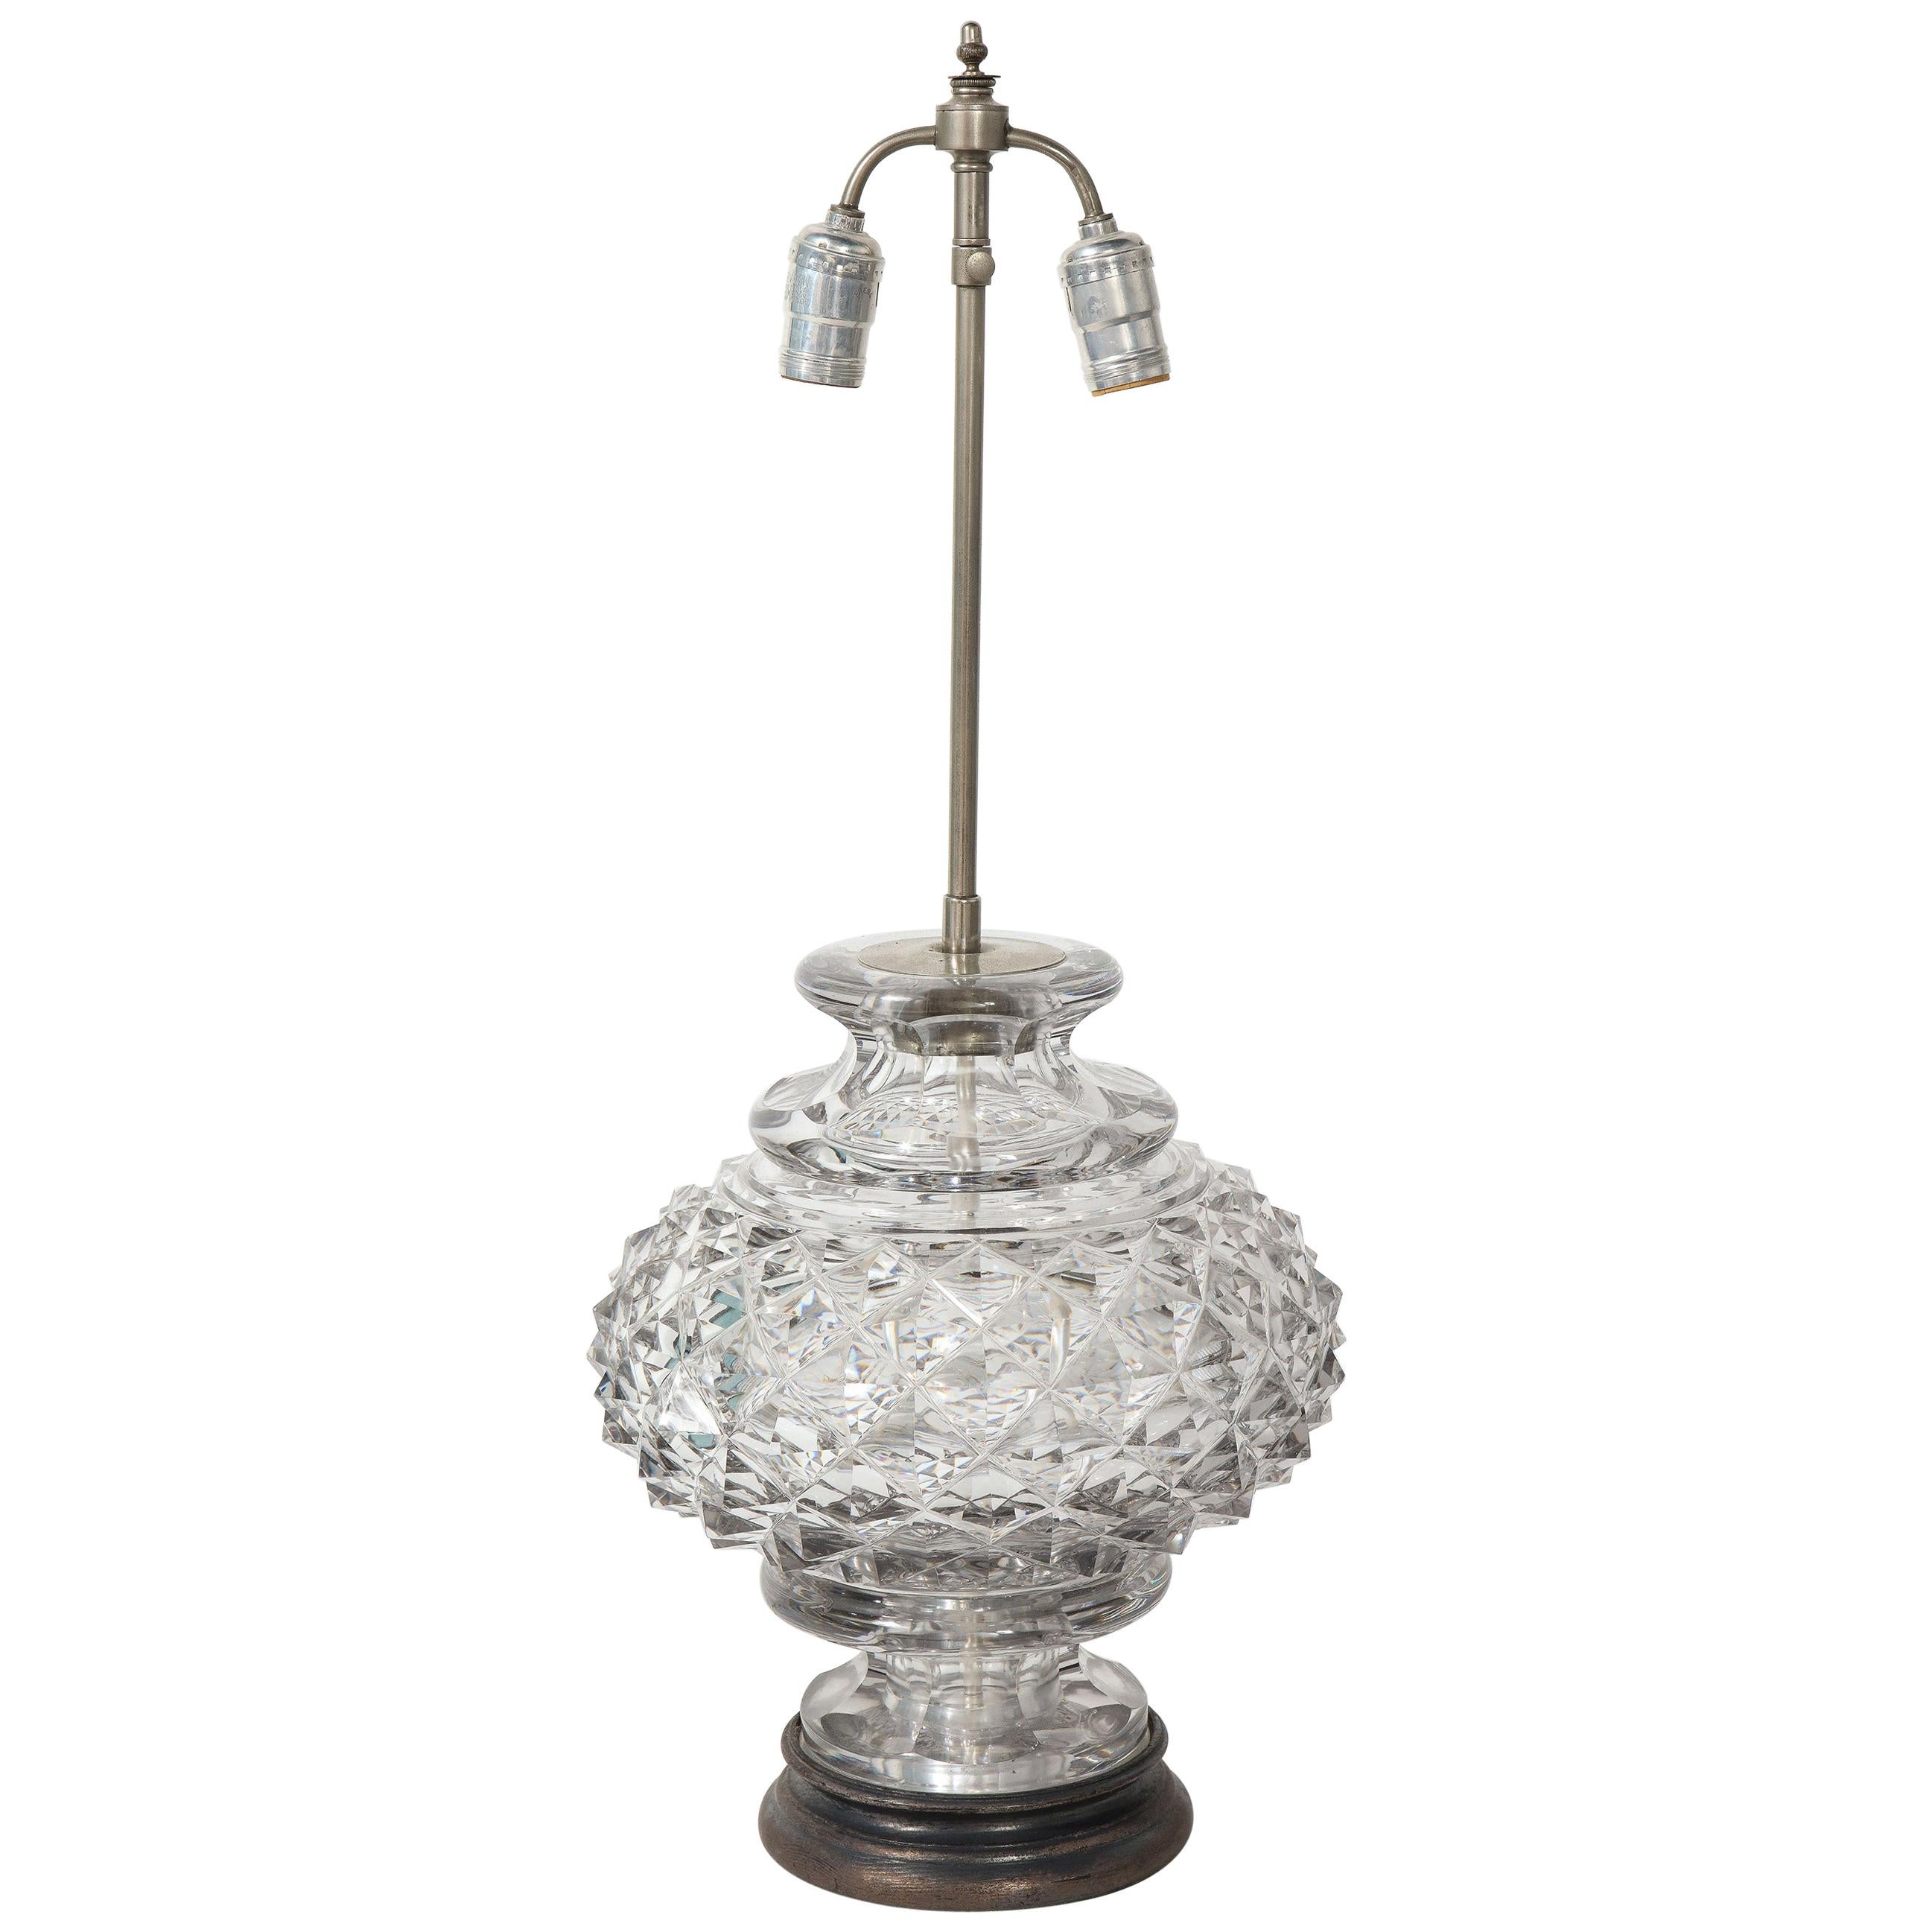 Bleikristall-Lampe aus dem 19. Jahrhundert